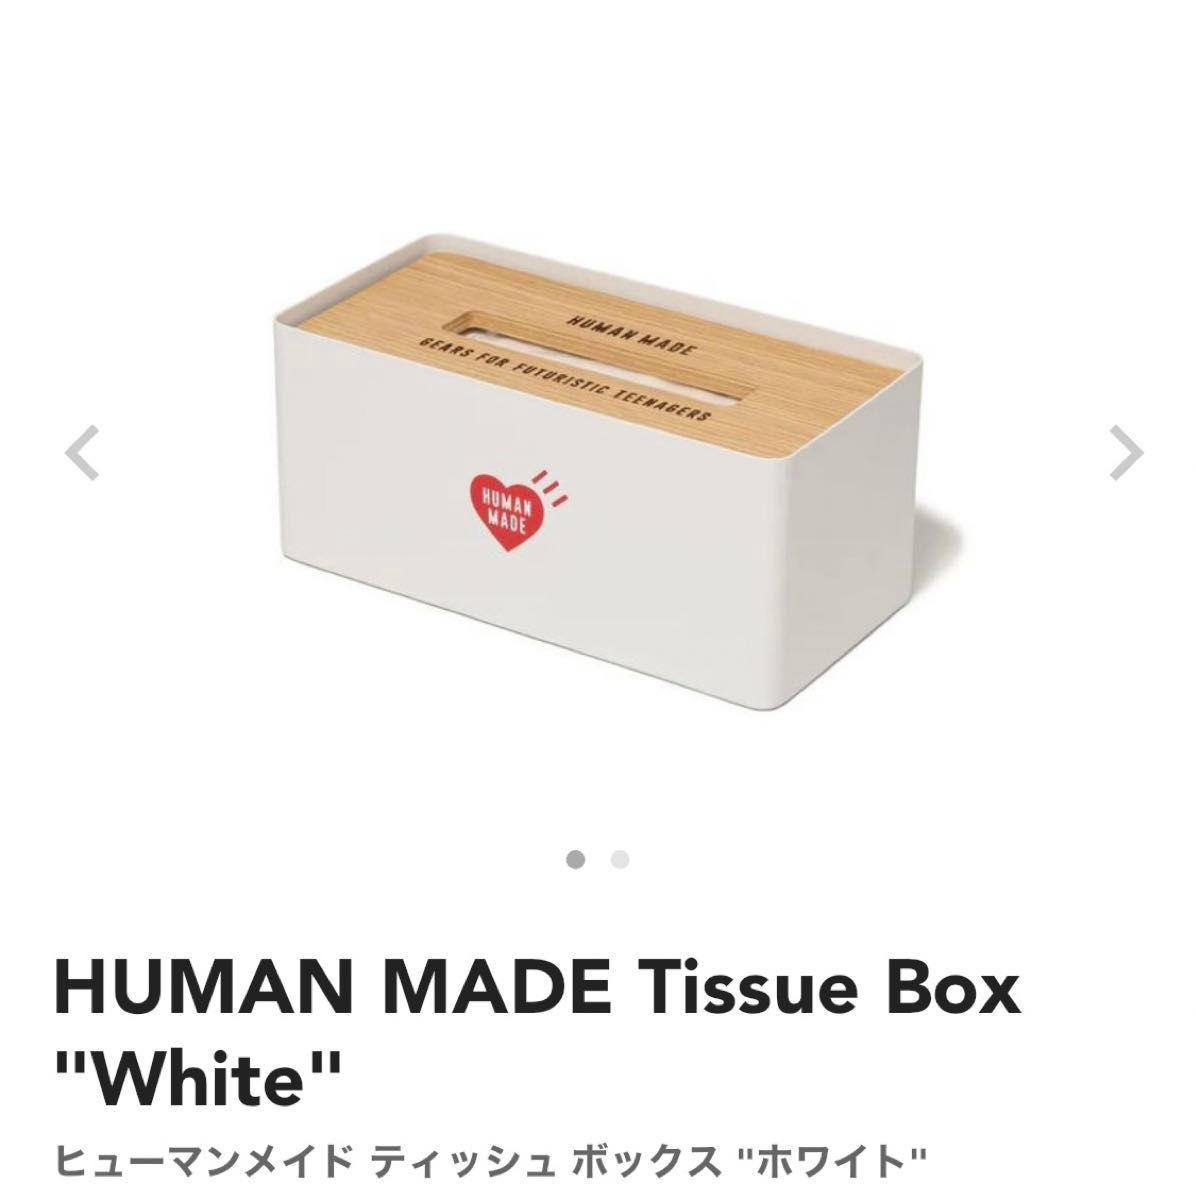 HUMAN MADE Tissue Box